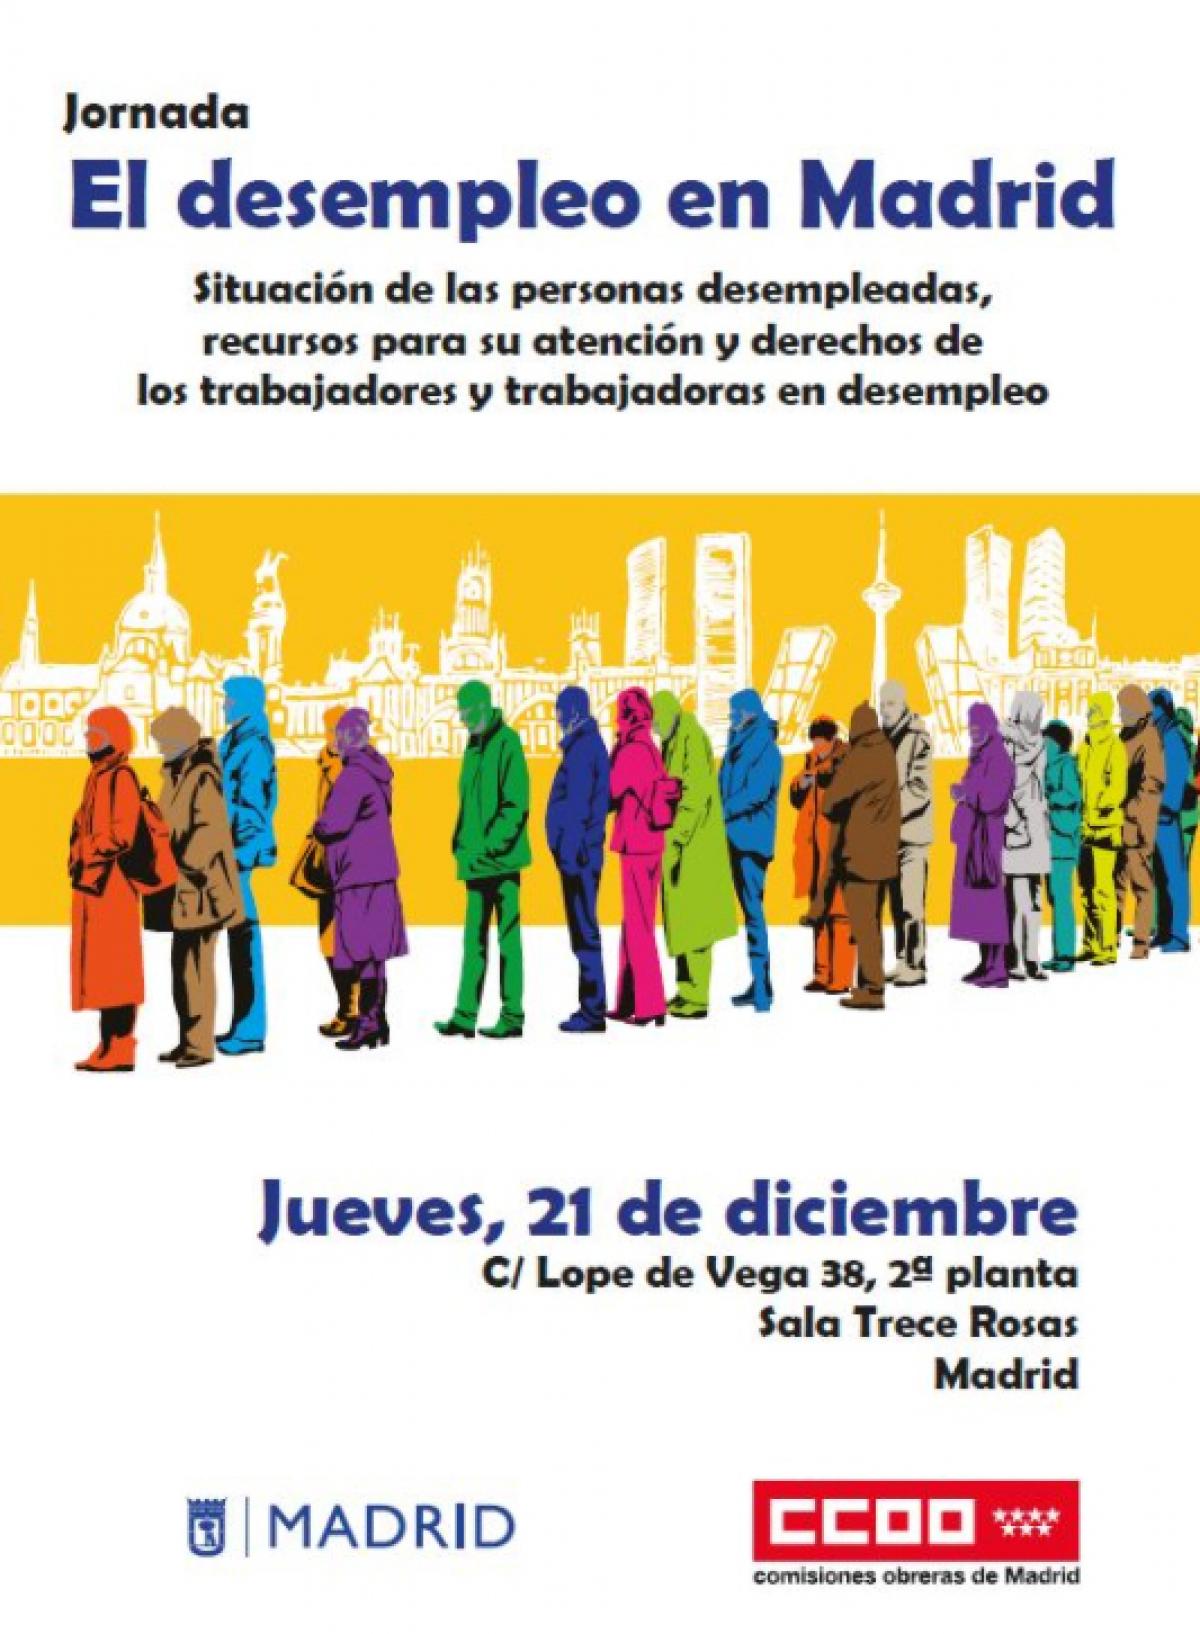 Jornada: El desempleo en Madrid